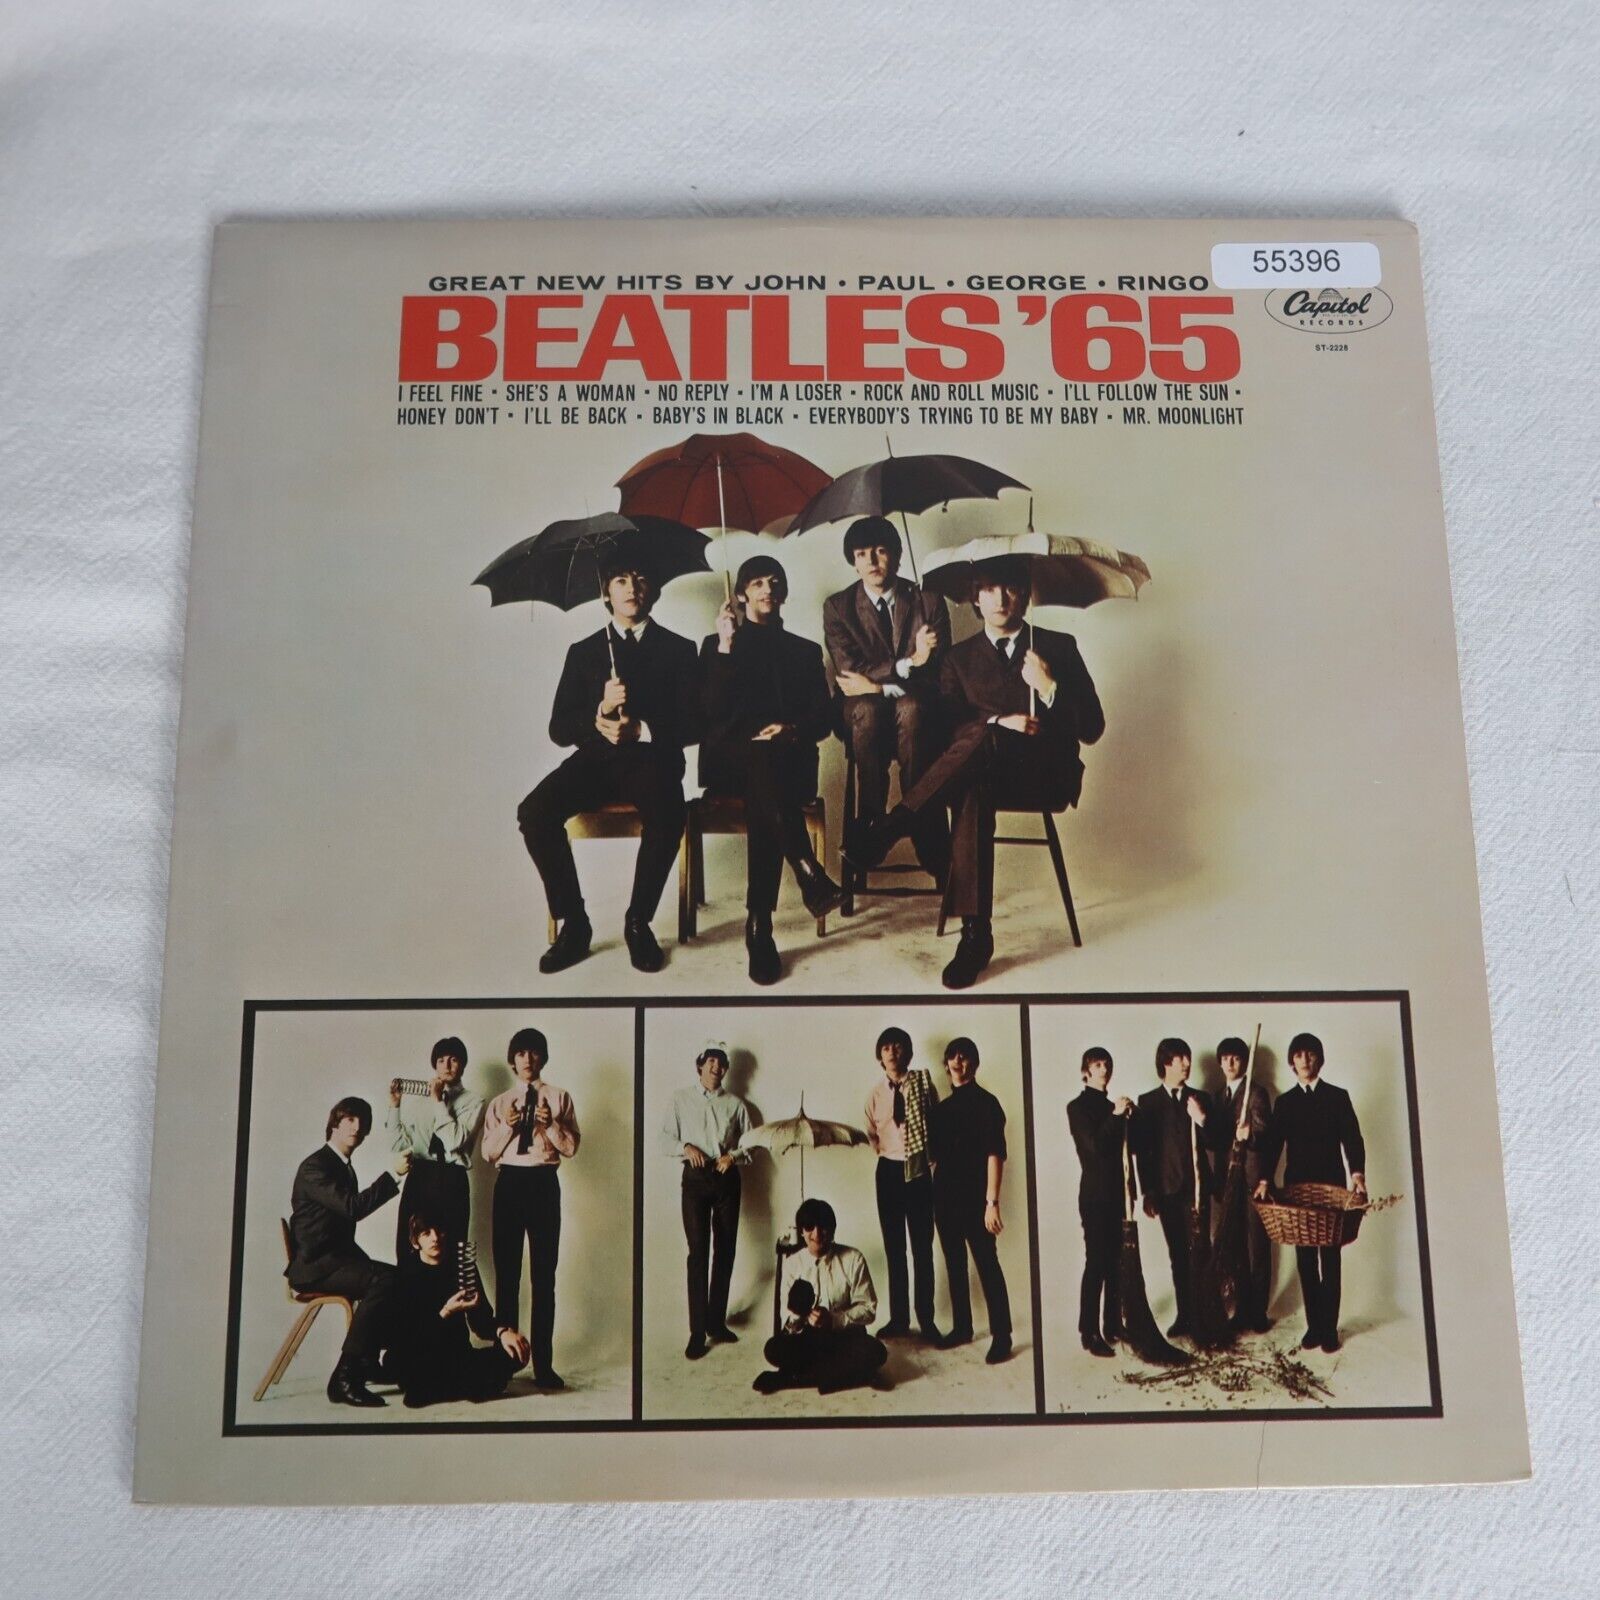 The Beatles Beatles '65 CAPITOL St 2228 LP Vinyl Record Album